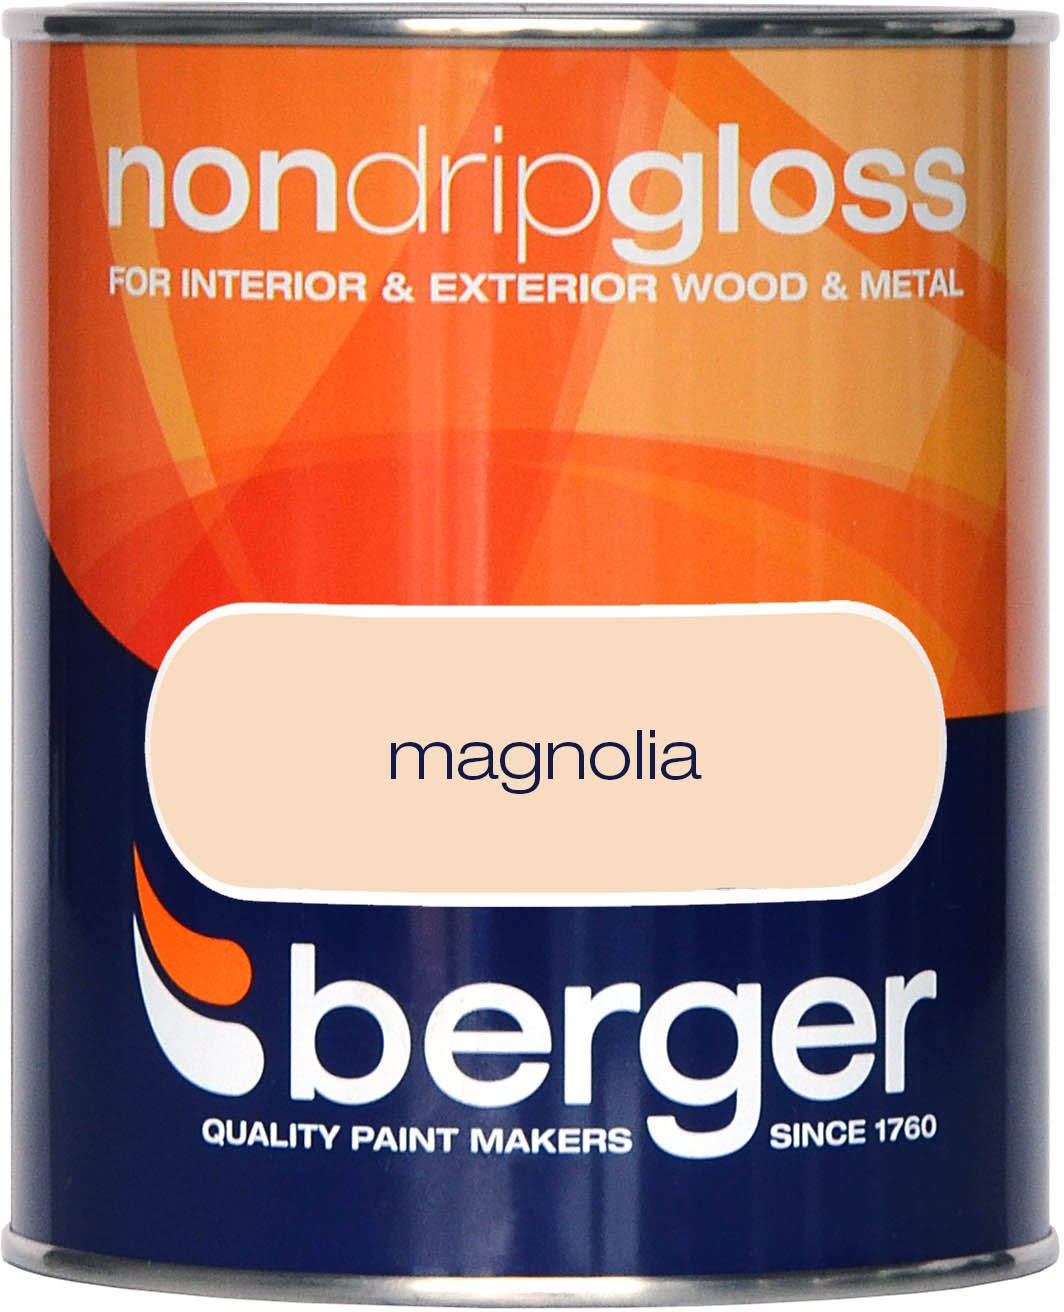 Berger Non Drip Gloss Paint - Magnolia, 750ml